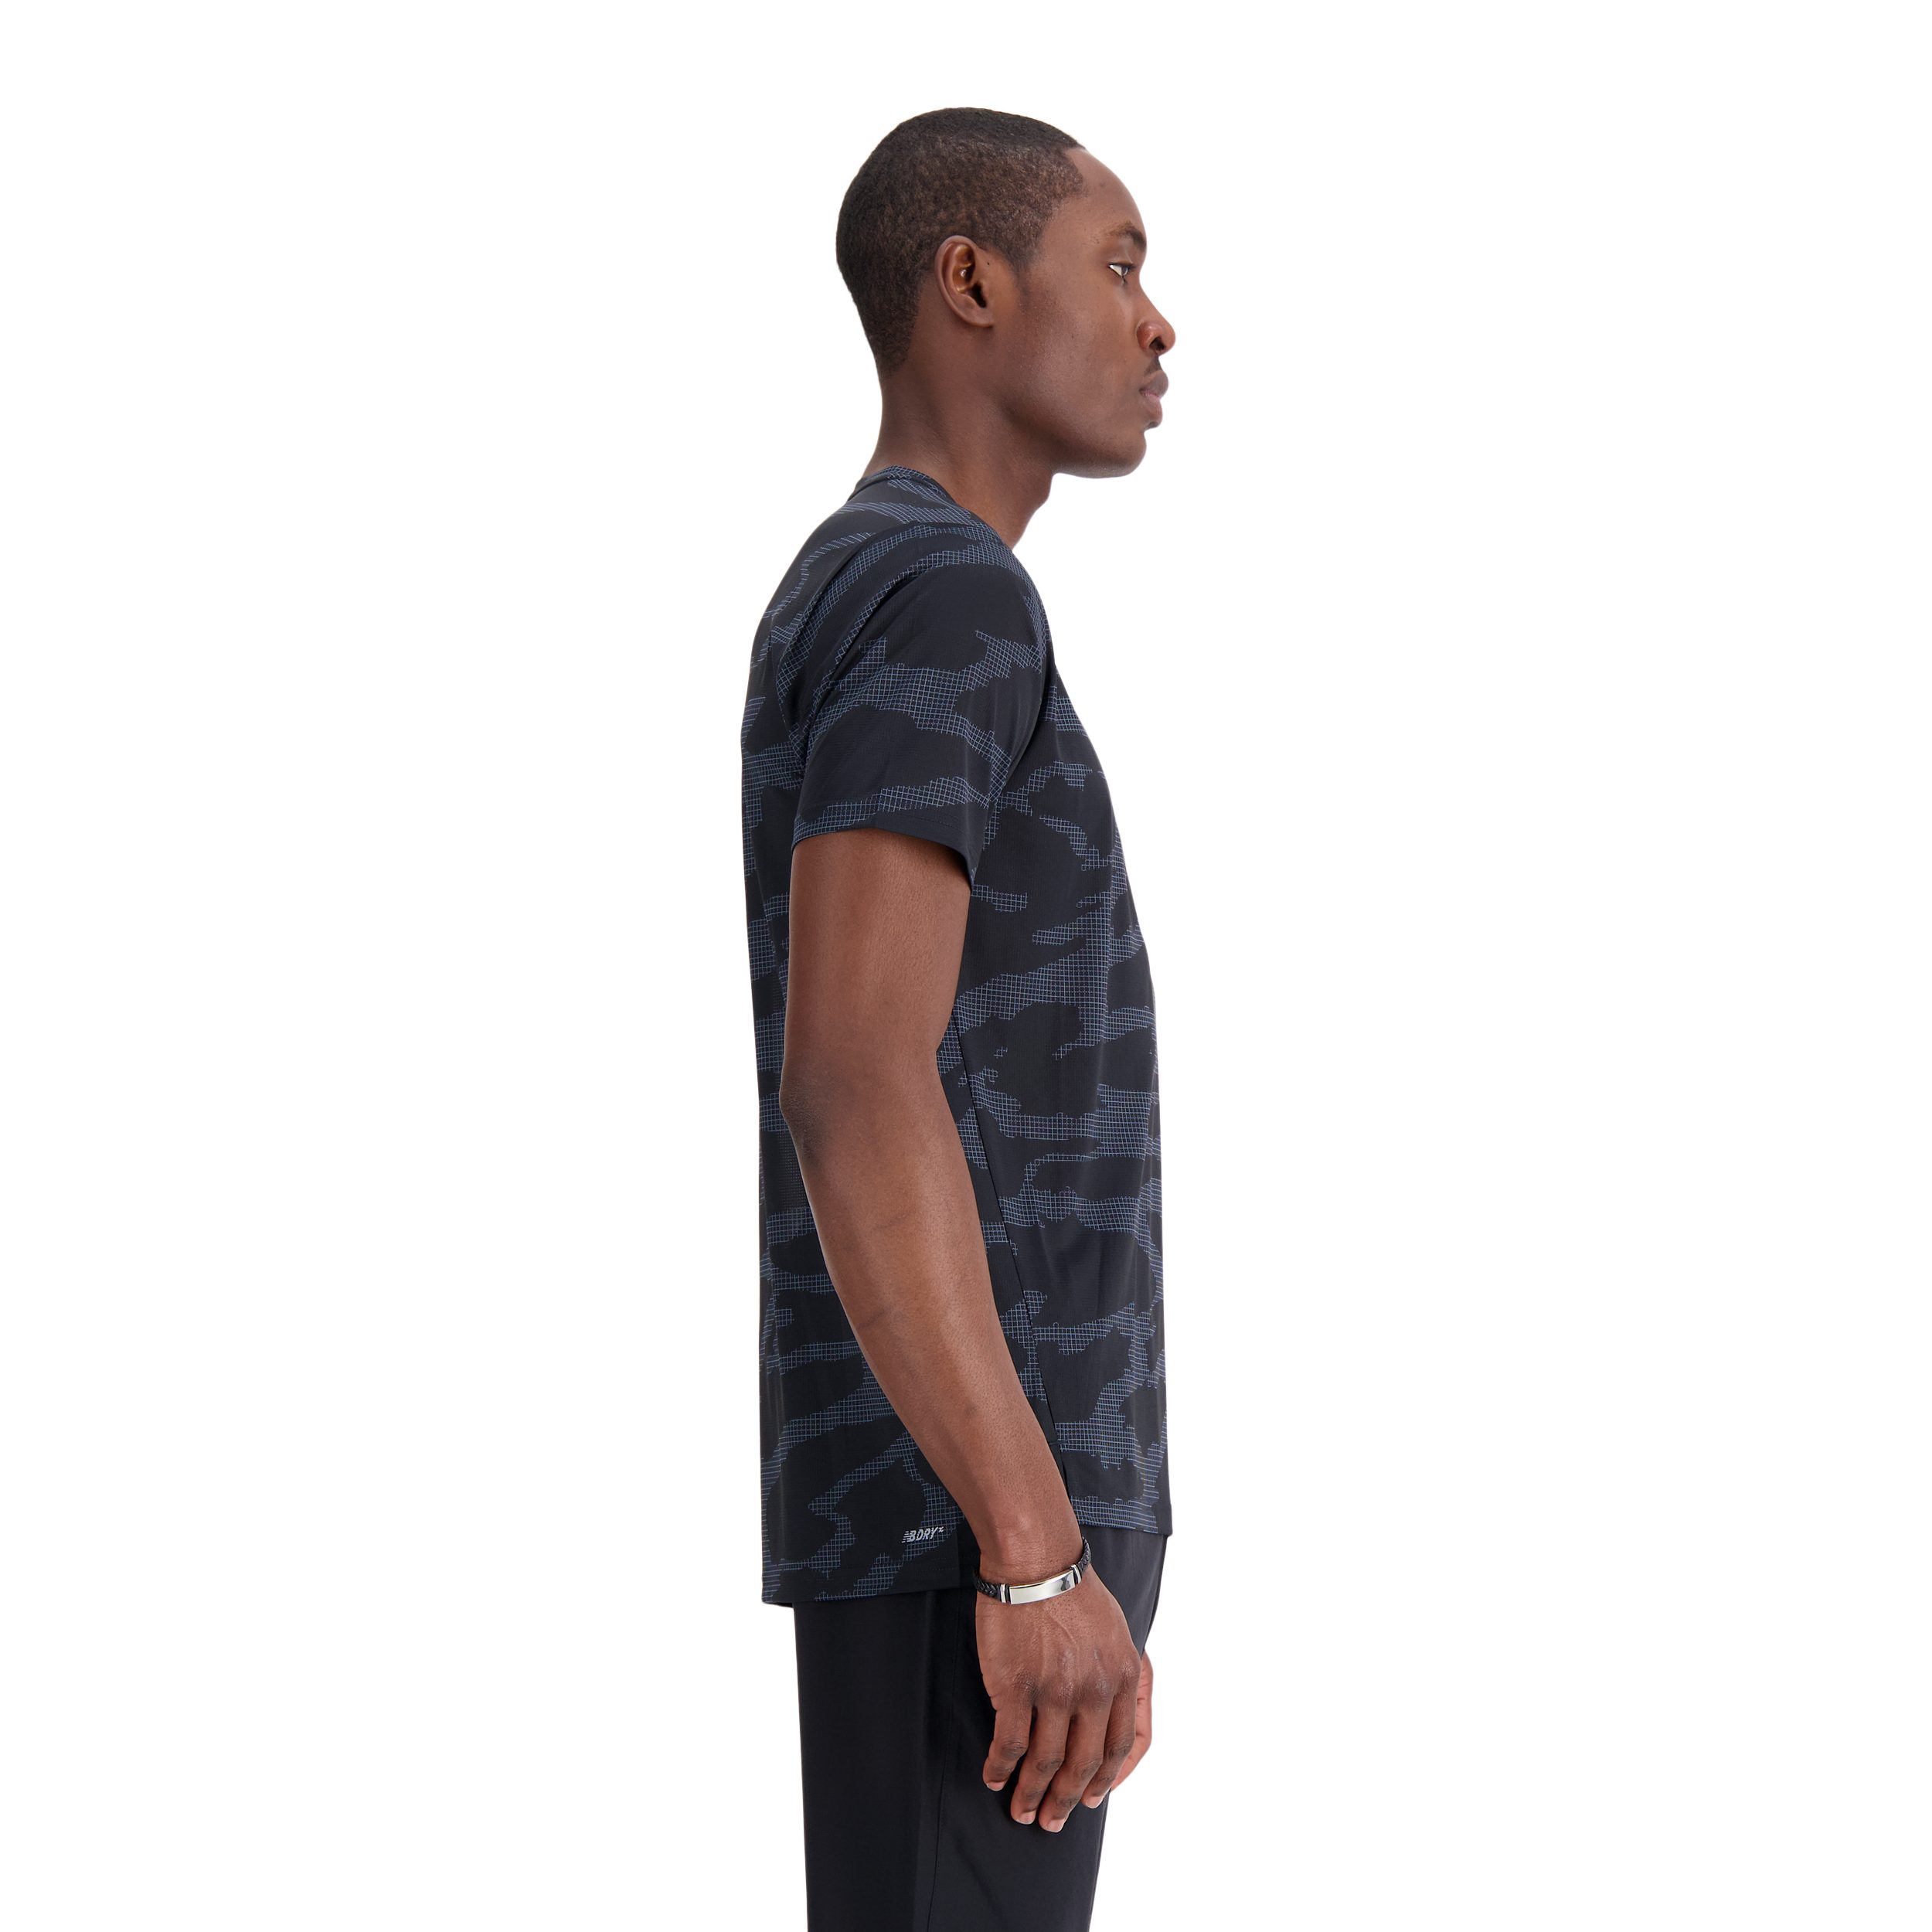 multi black New Balance T-Shirt